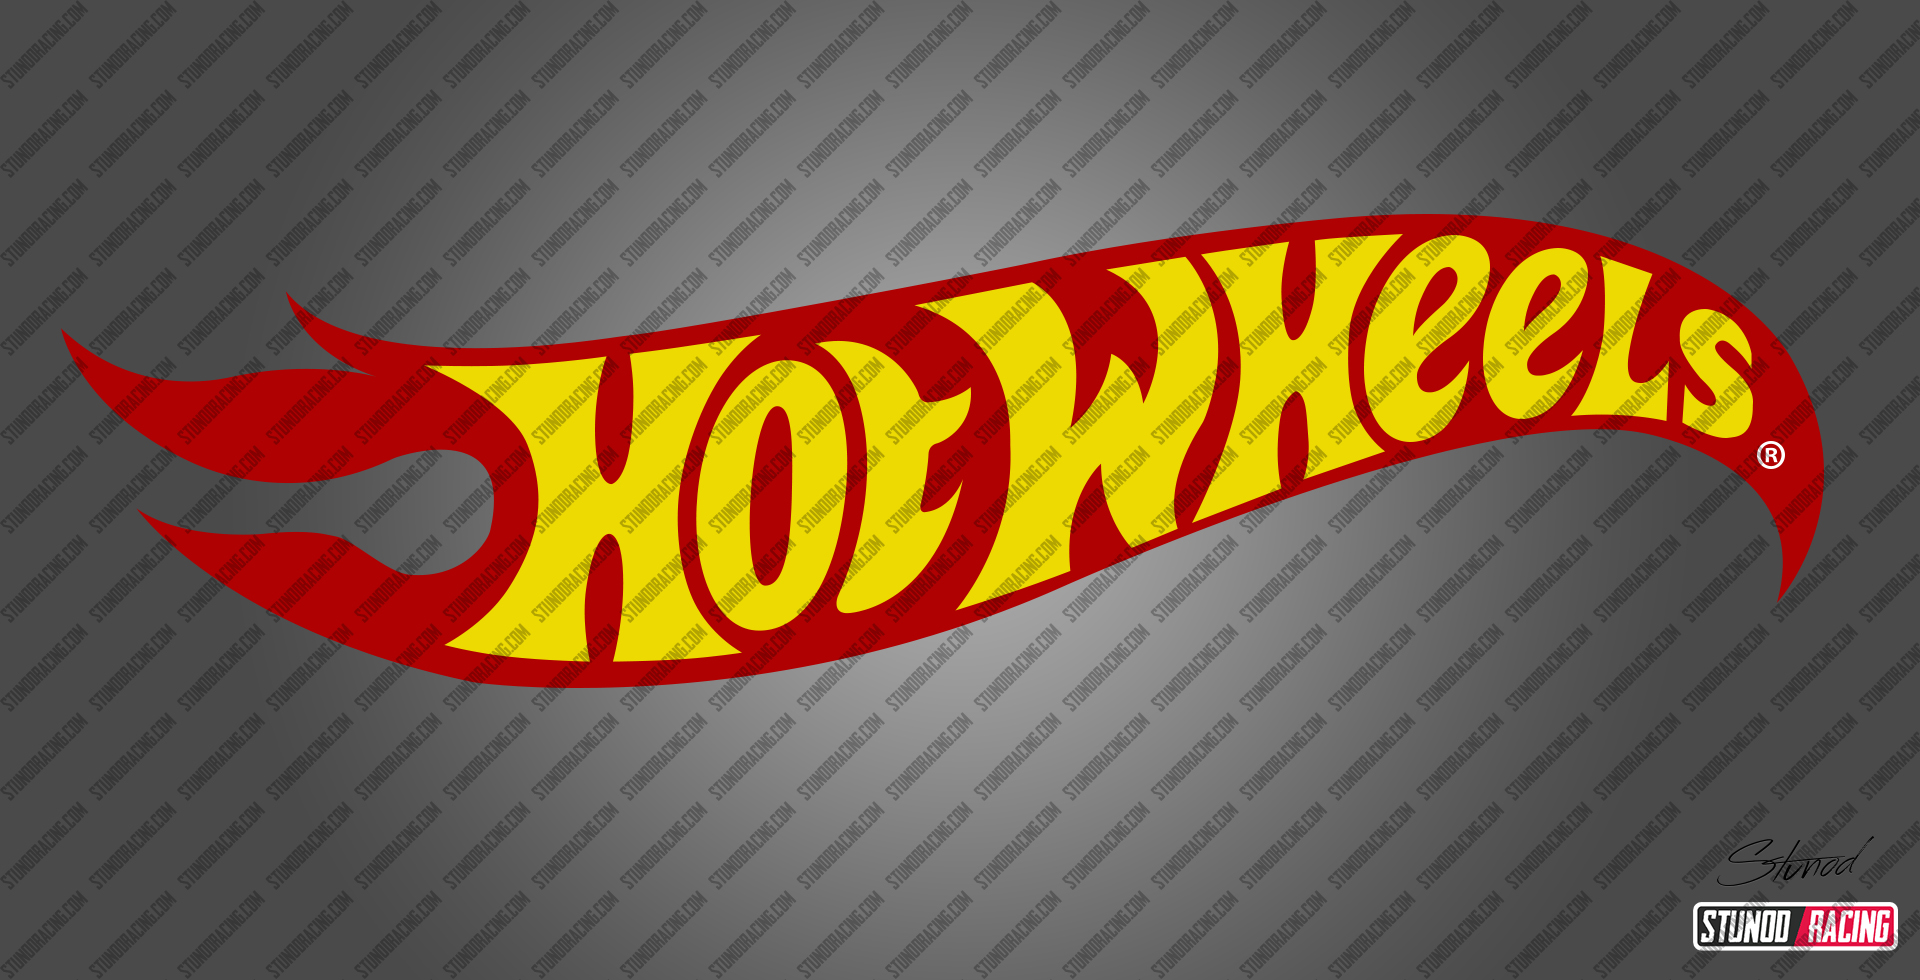 StunodRacing-HotWheels-Logo.jpg